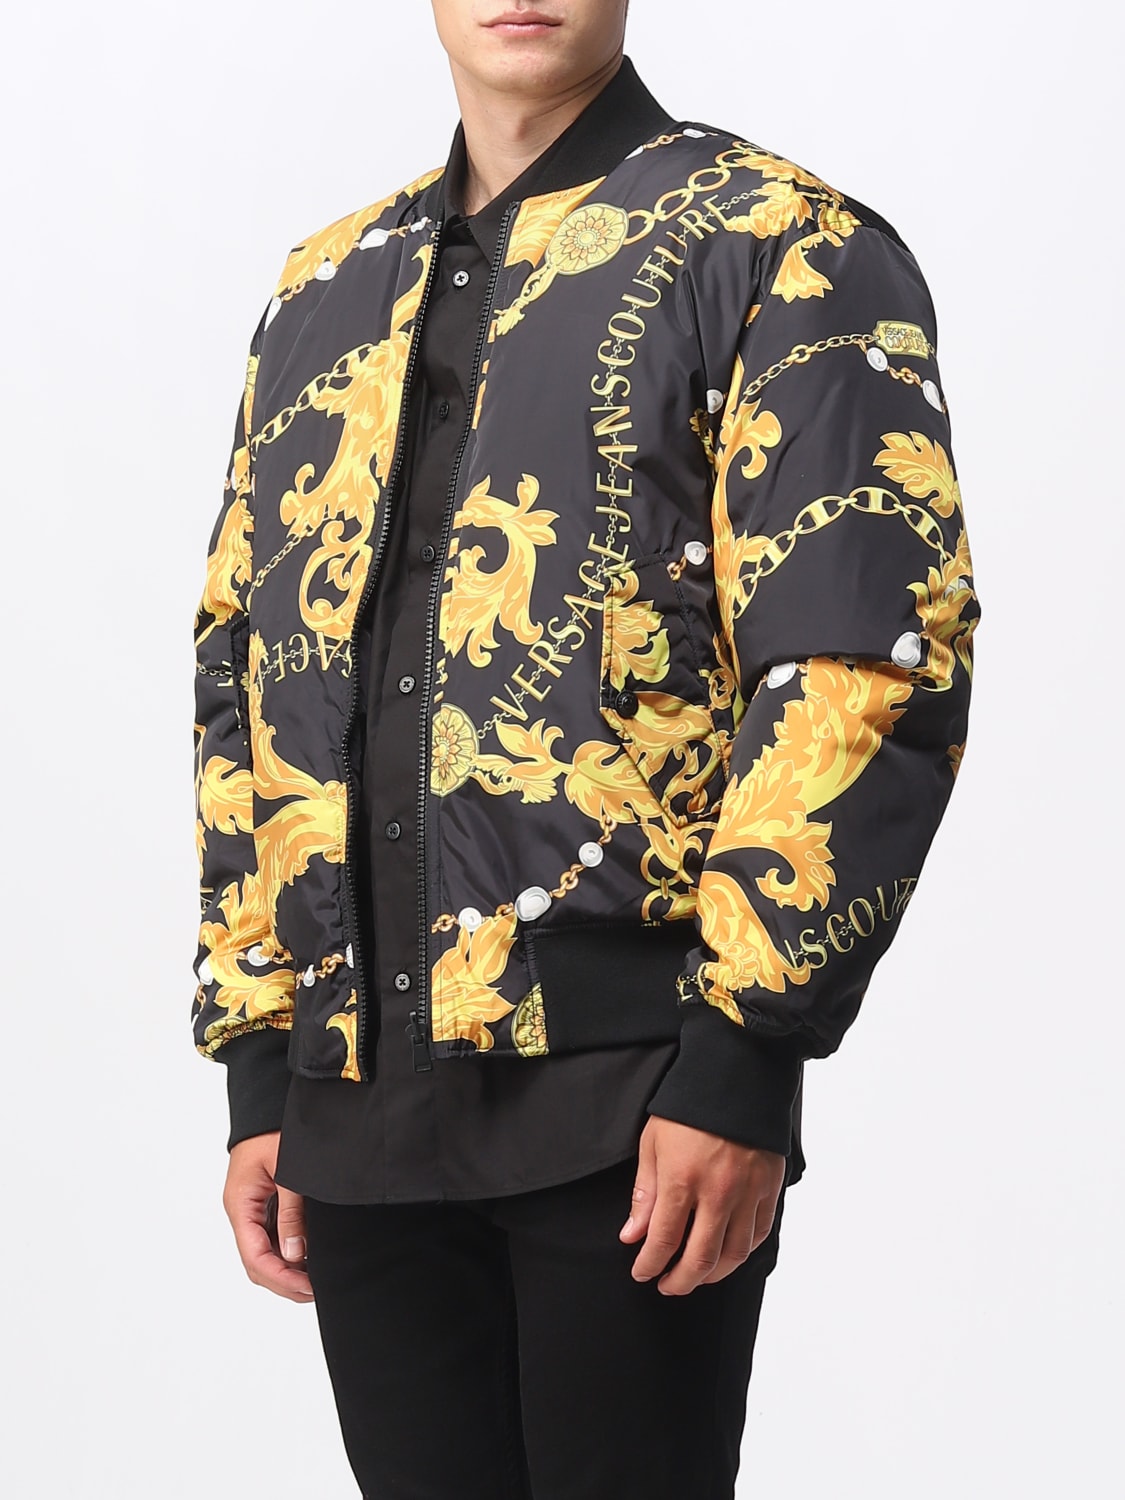 VERSACE JEANS COUTURE: jacket for man Black | Versace Jeans Couture jacket 75GASD04CQS70 online on GIGLIO.COM